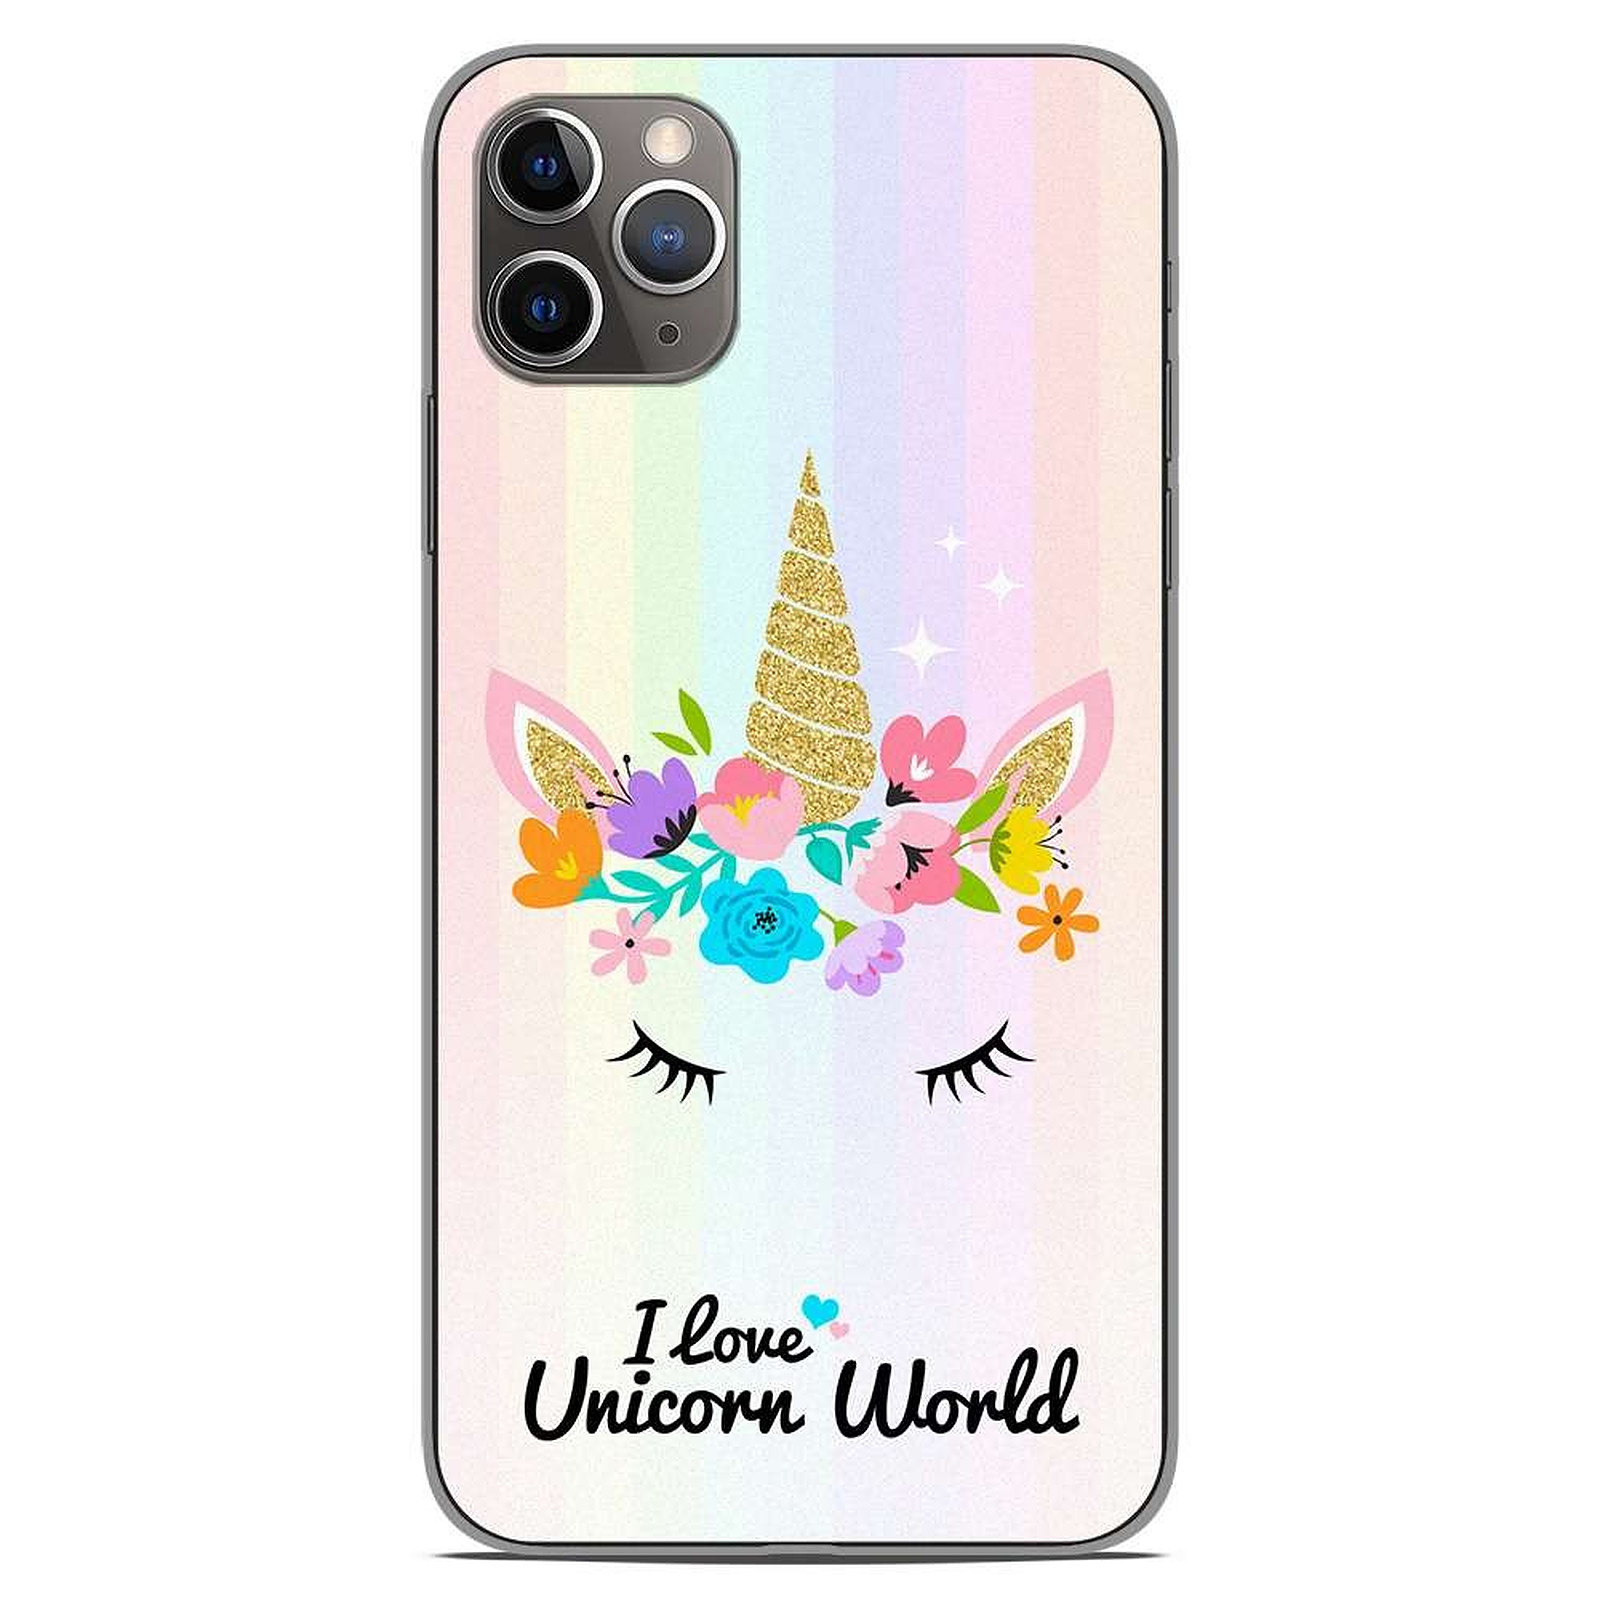 1001 Coques Coque silicone gel Apple iPhone 11 Pro Max motif Unicorn World - Coque telephone 1001Coques